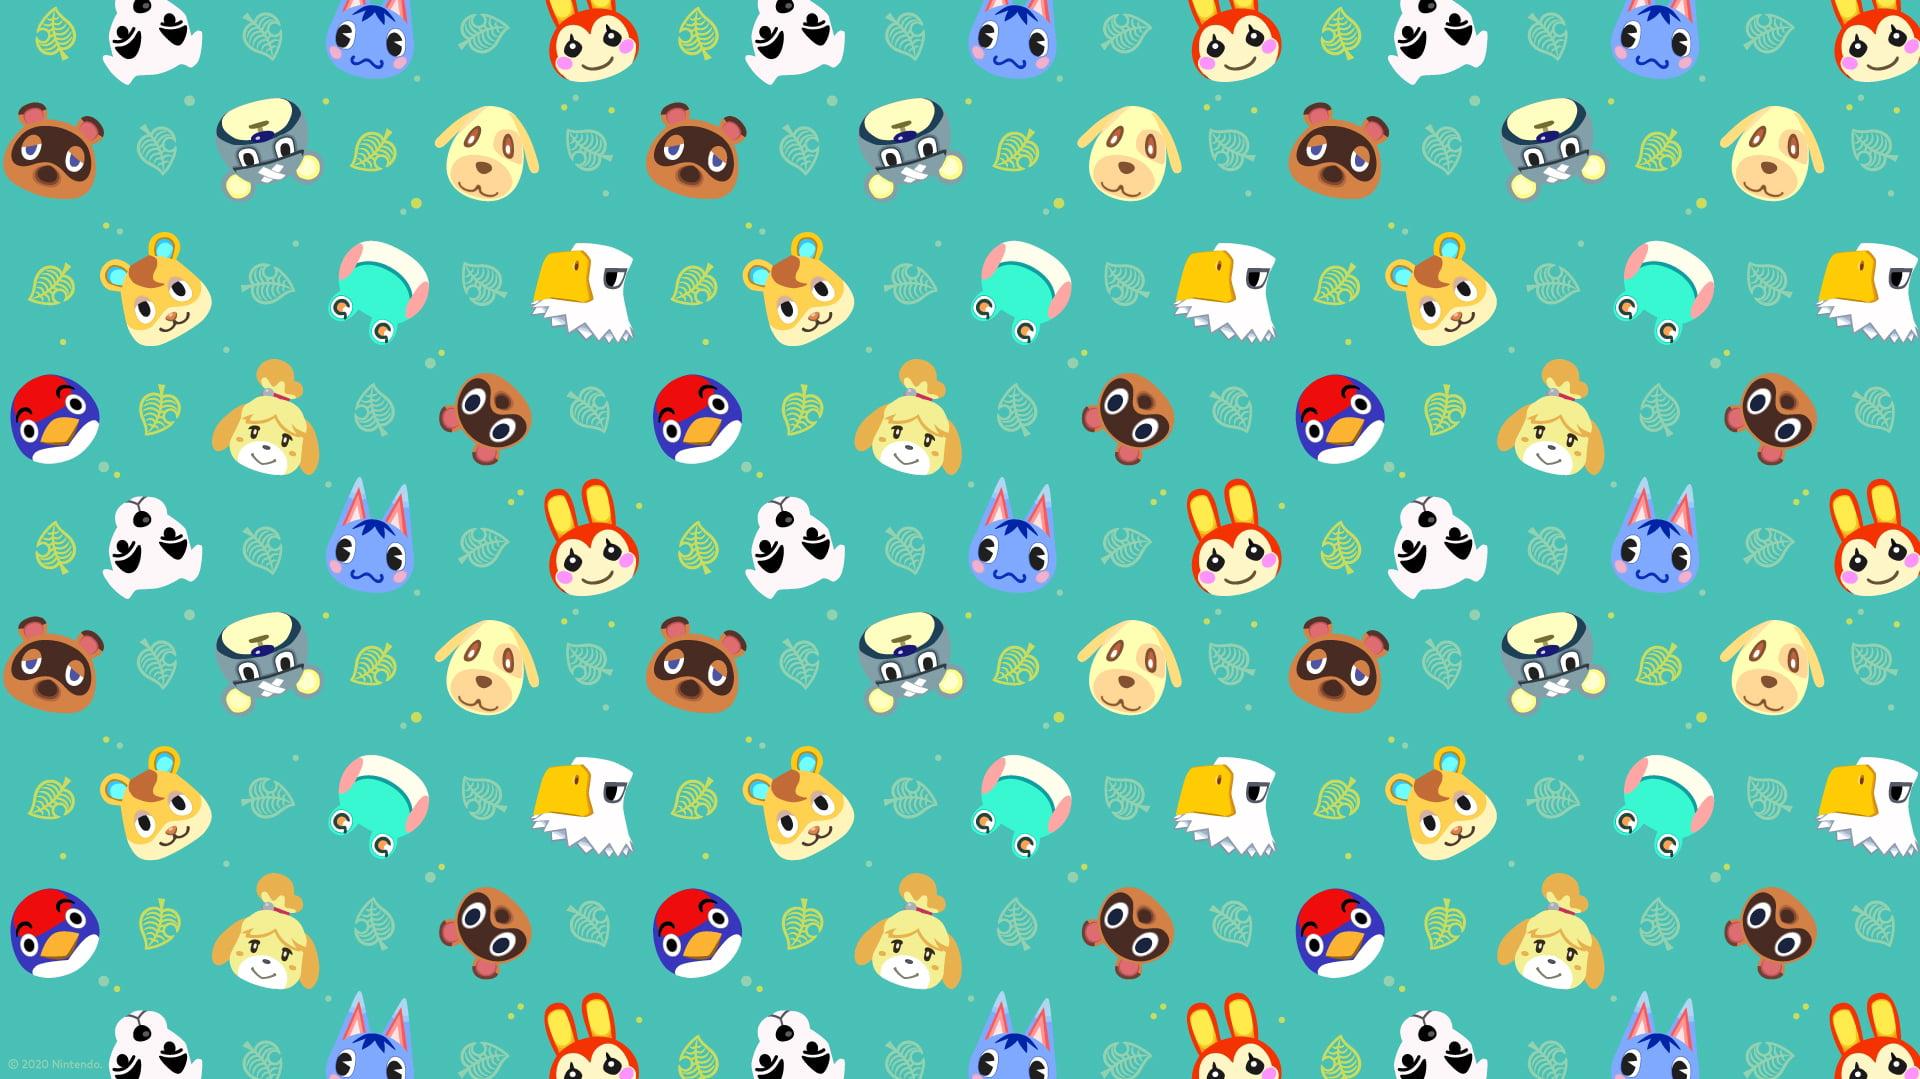 Three Cute Animal Crossing New Horizons Wallpaper From